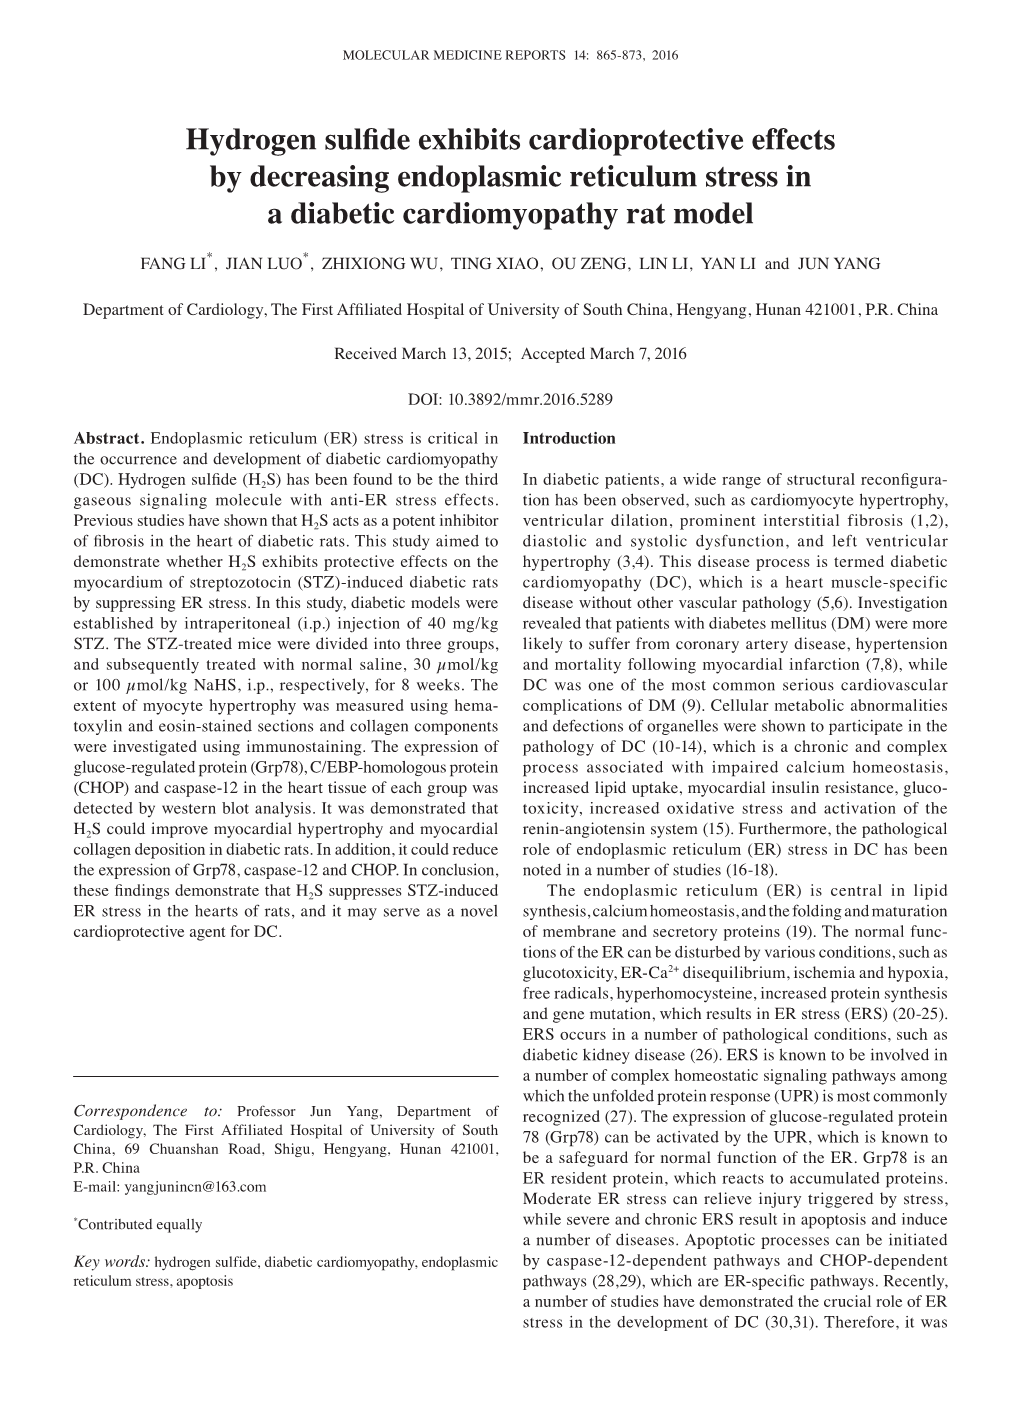 Hydrogen Sulfide Exhibits Cardioprotective Effects by Decreasing Endoplasmic Reticulum Stress in a Diabetic Cardiomyopathy Rat Model